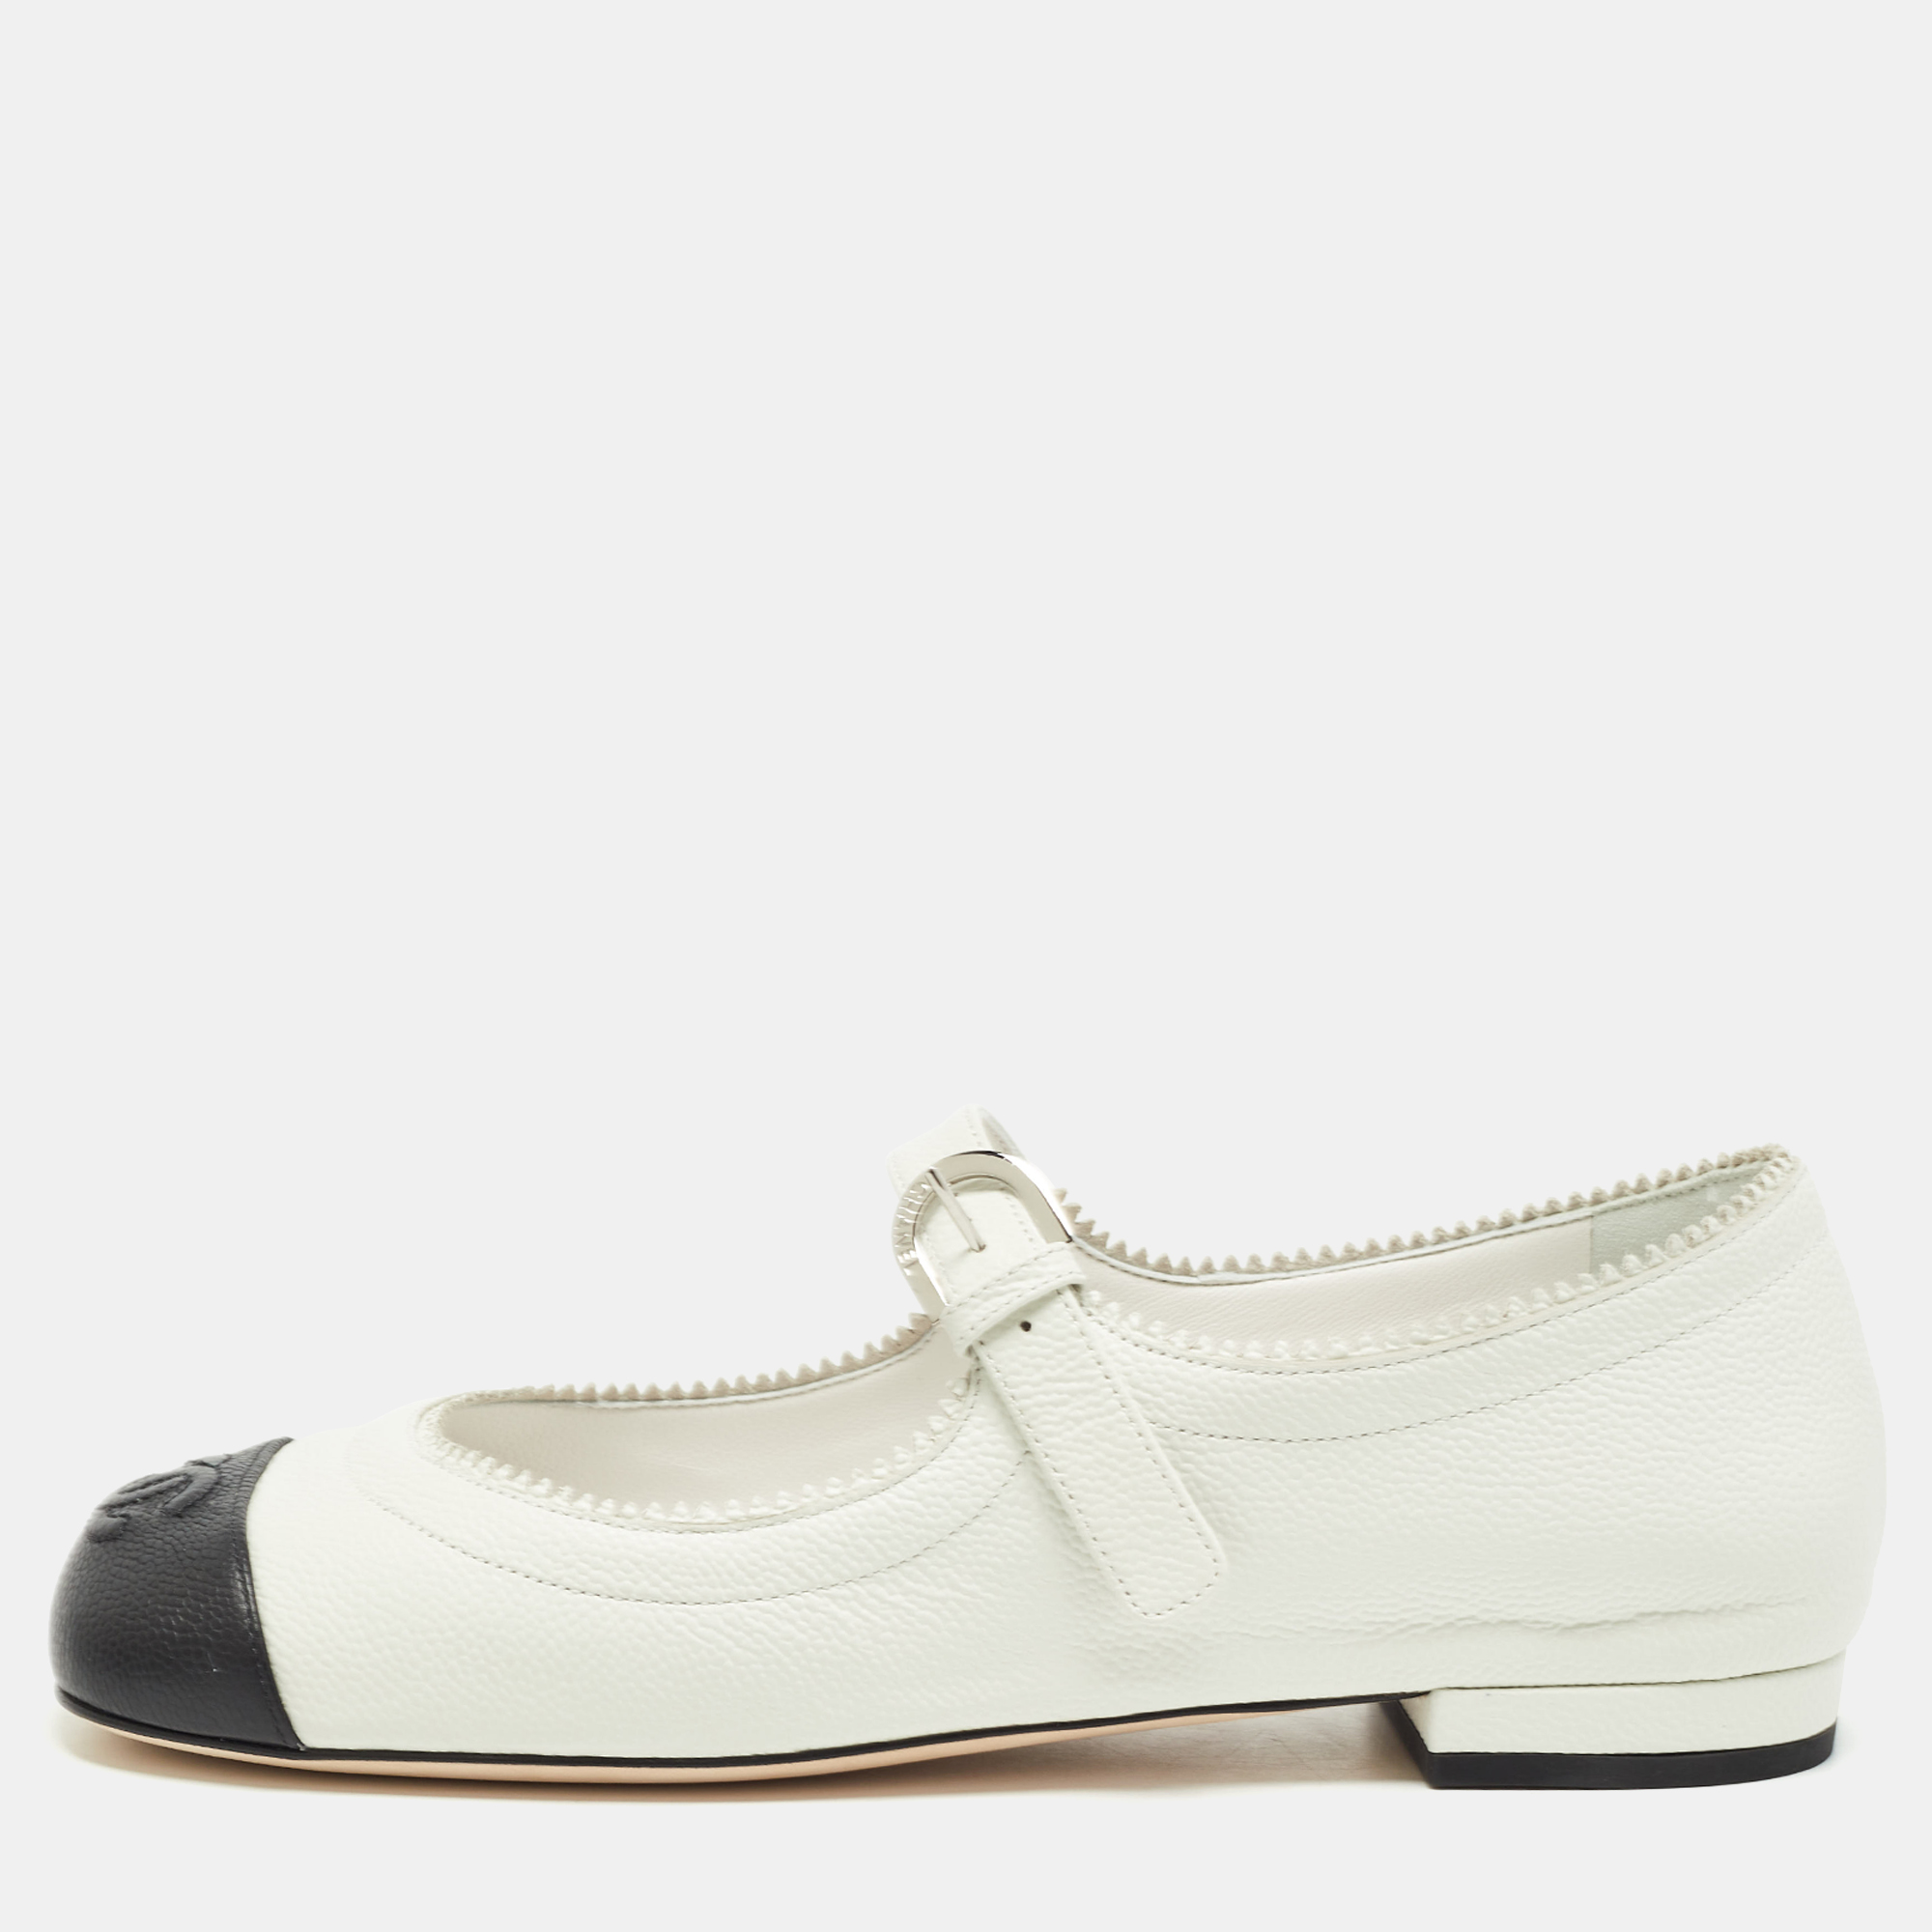 

Chanel White/Black Leather CC Mary Jane Flats Size